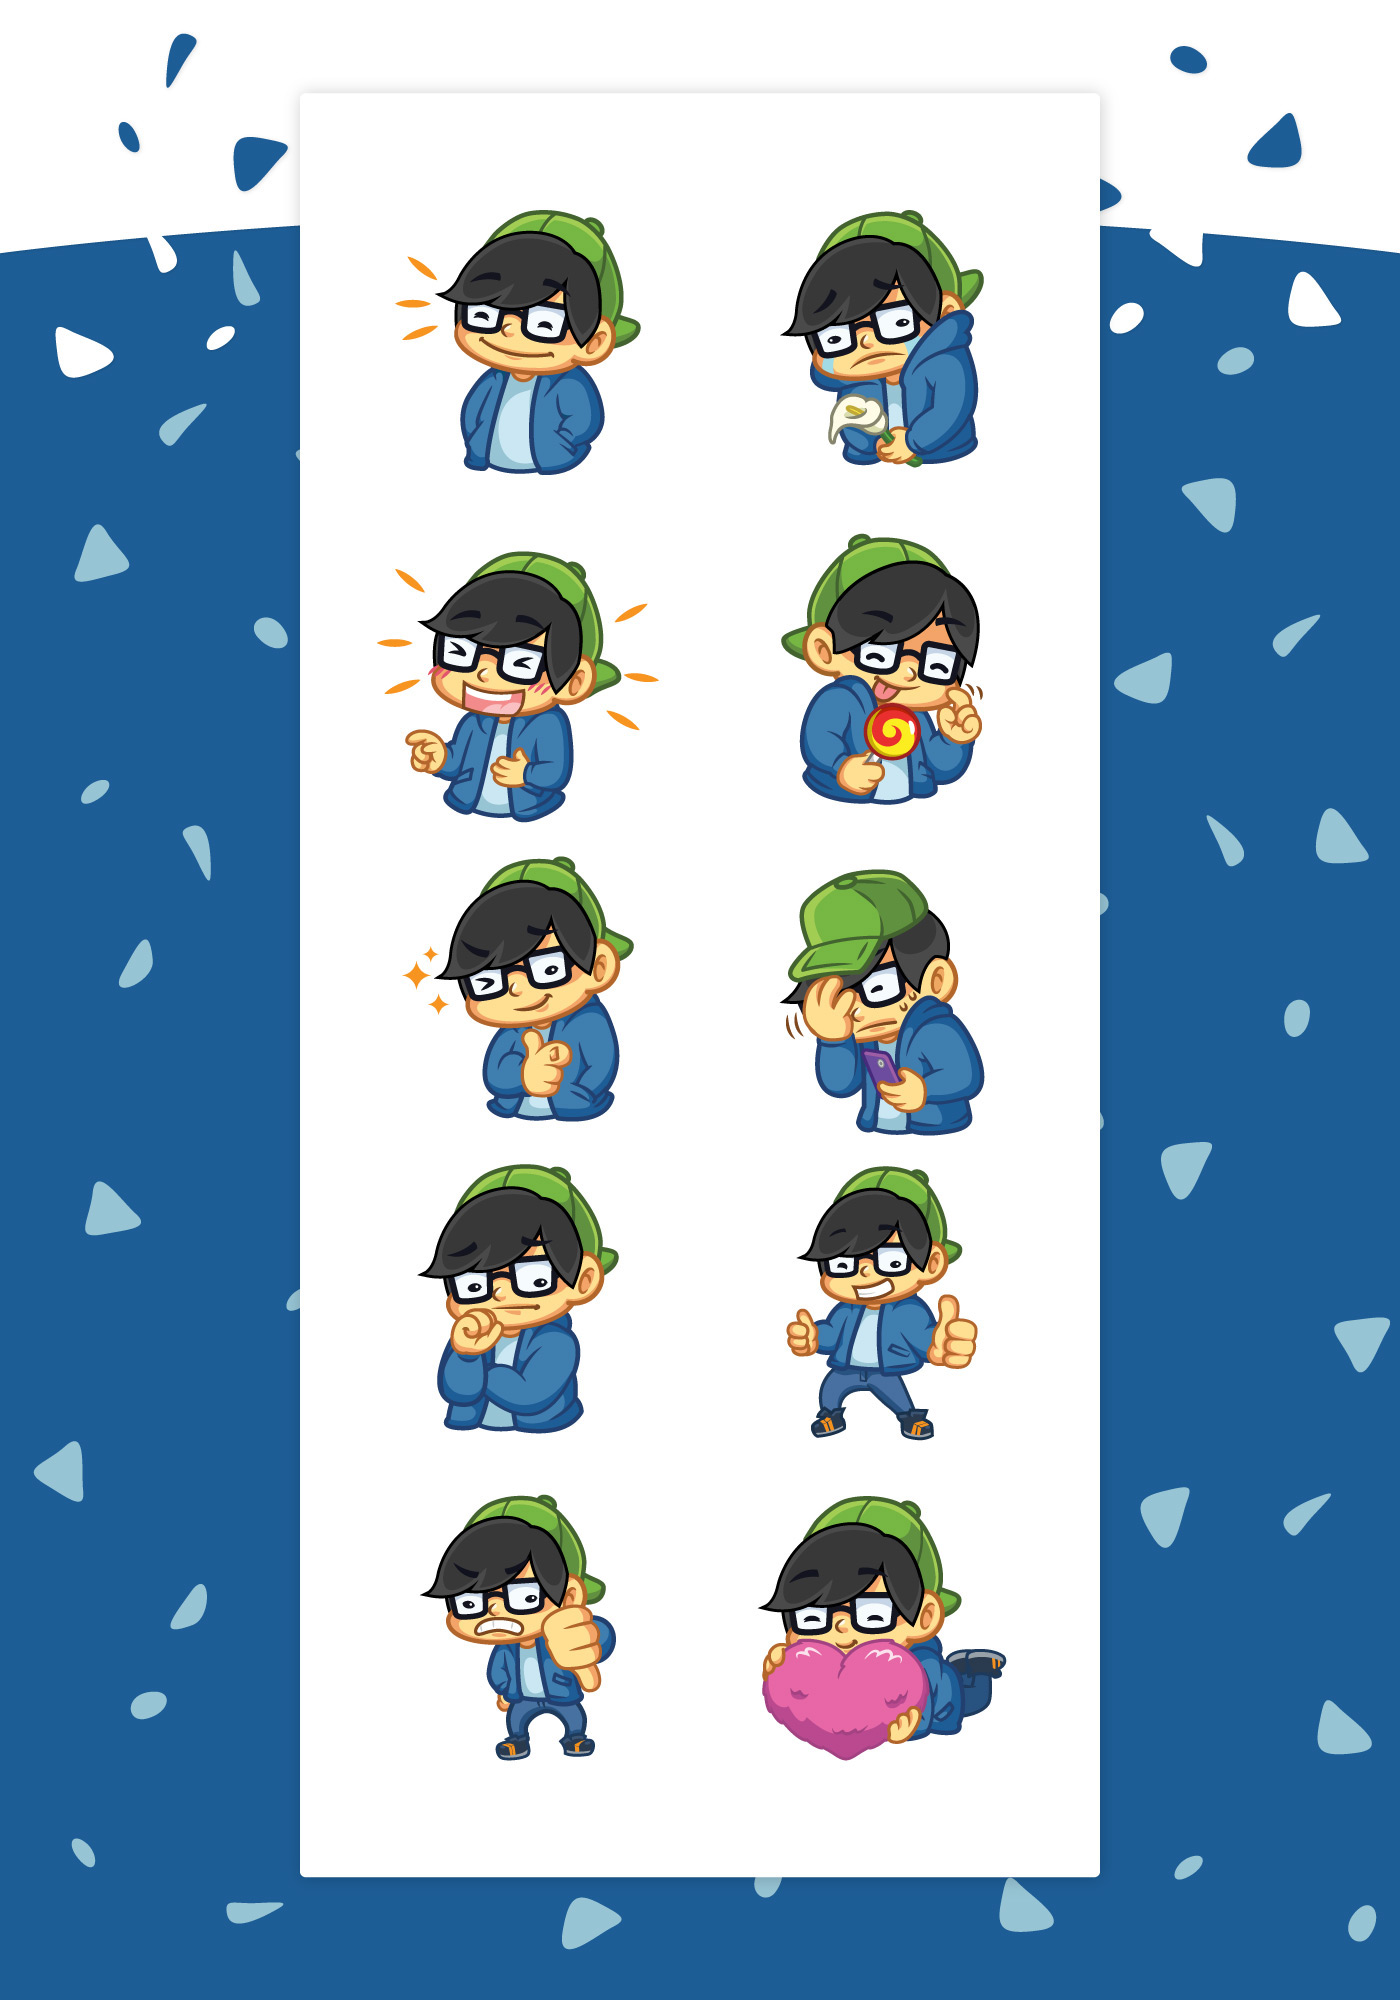 stickers askfm line KakaoTalk messenger Mascot Geek Guy glasses expressions cartoon